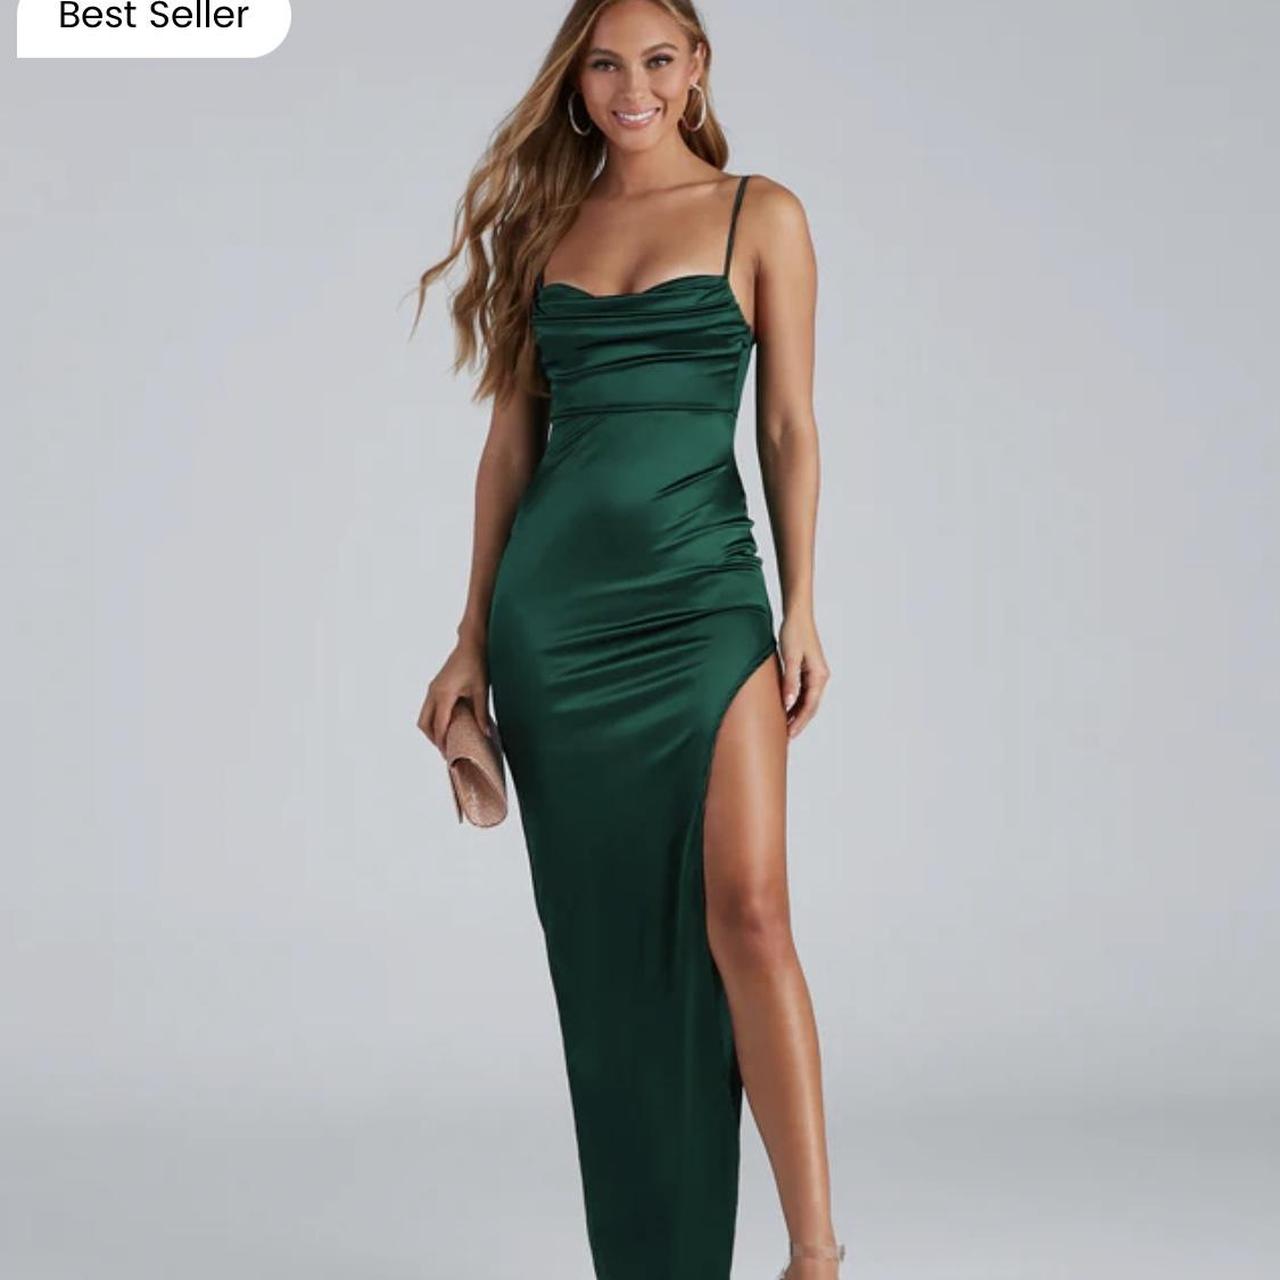 Windsor- beautiful emerald green maxi dress Flaunt... - Depop